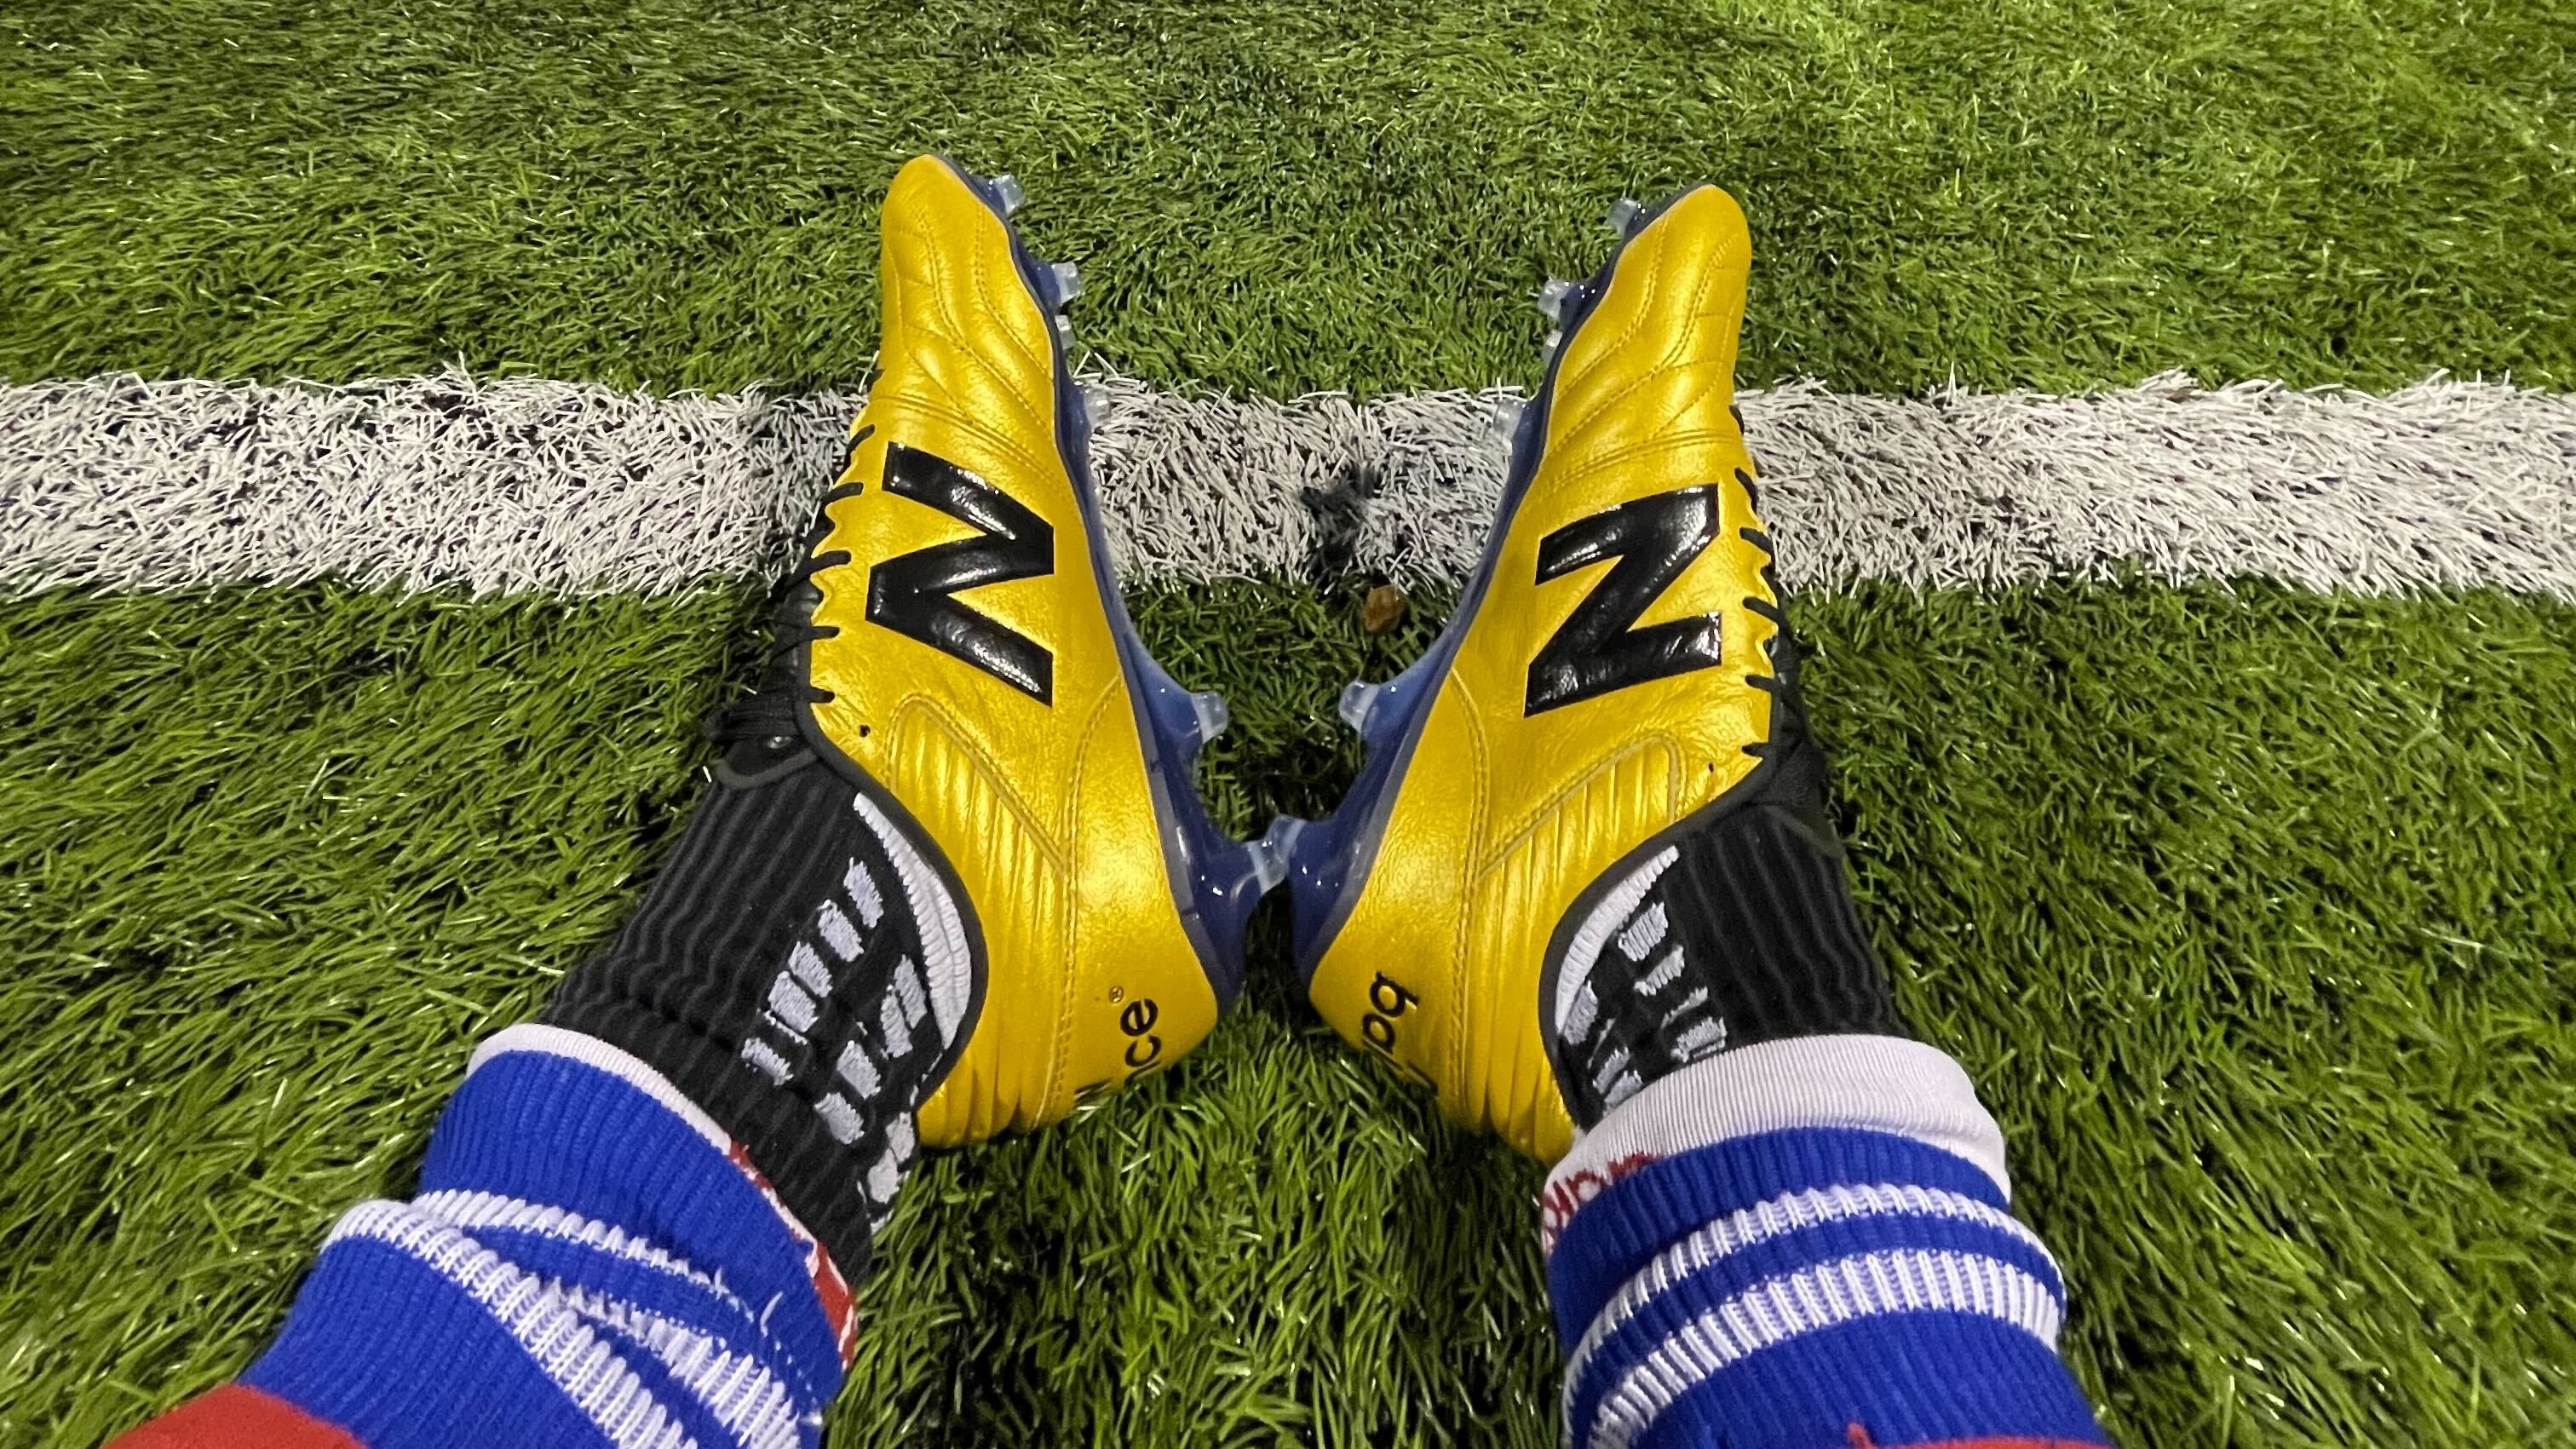 New Balance 442 v2 football boots review: A comfortable no-thrills